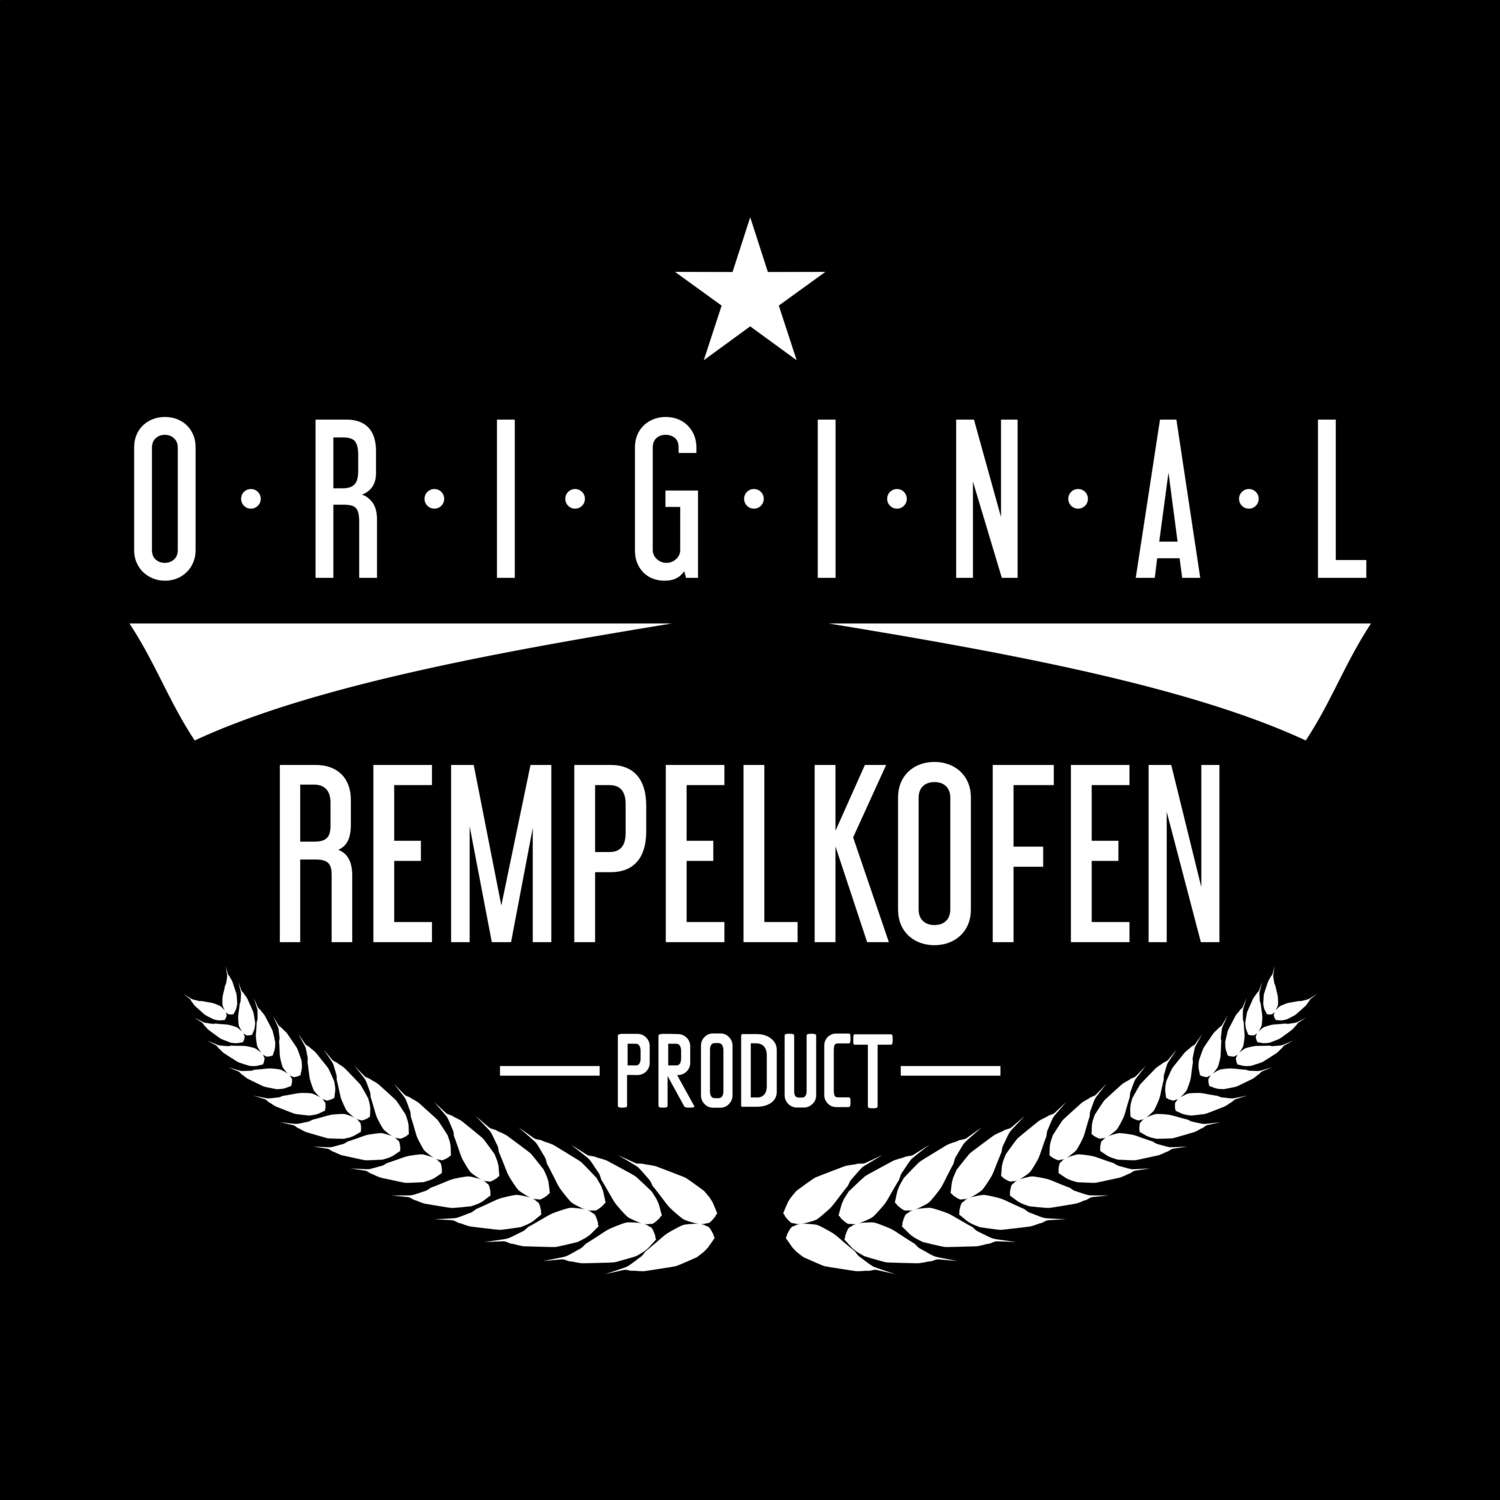 Rempelkofen T-Shirt »Original Product«